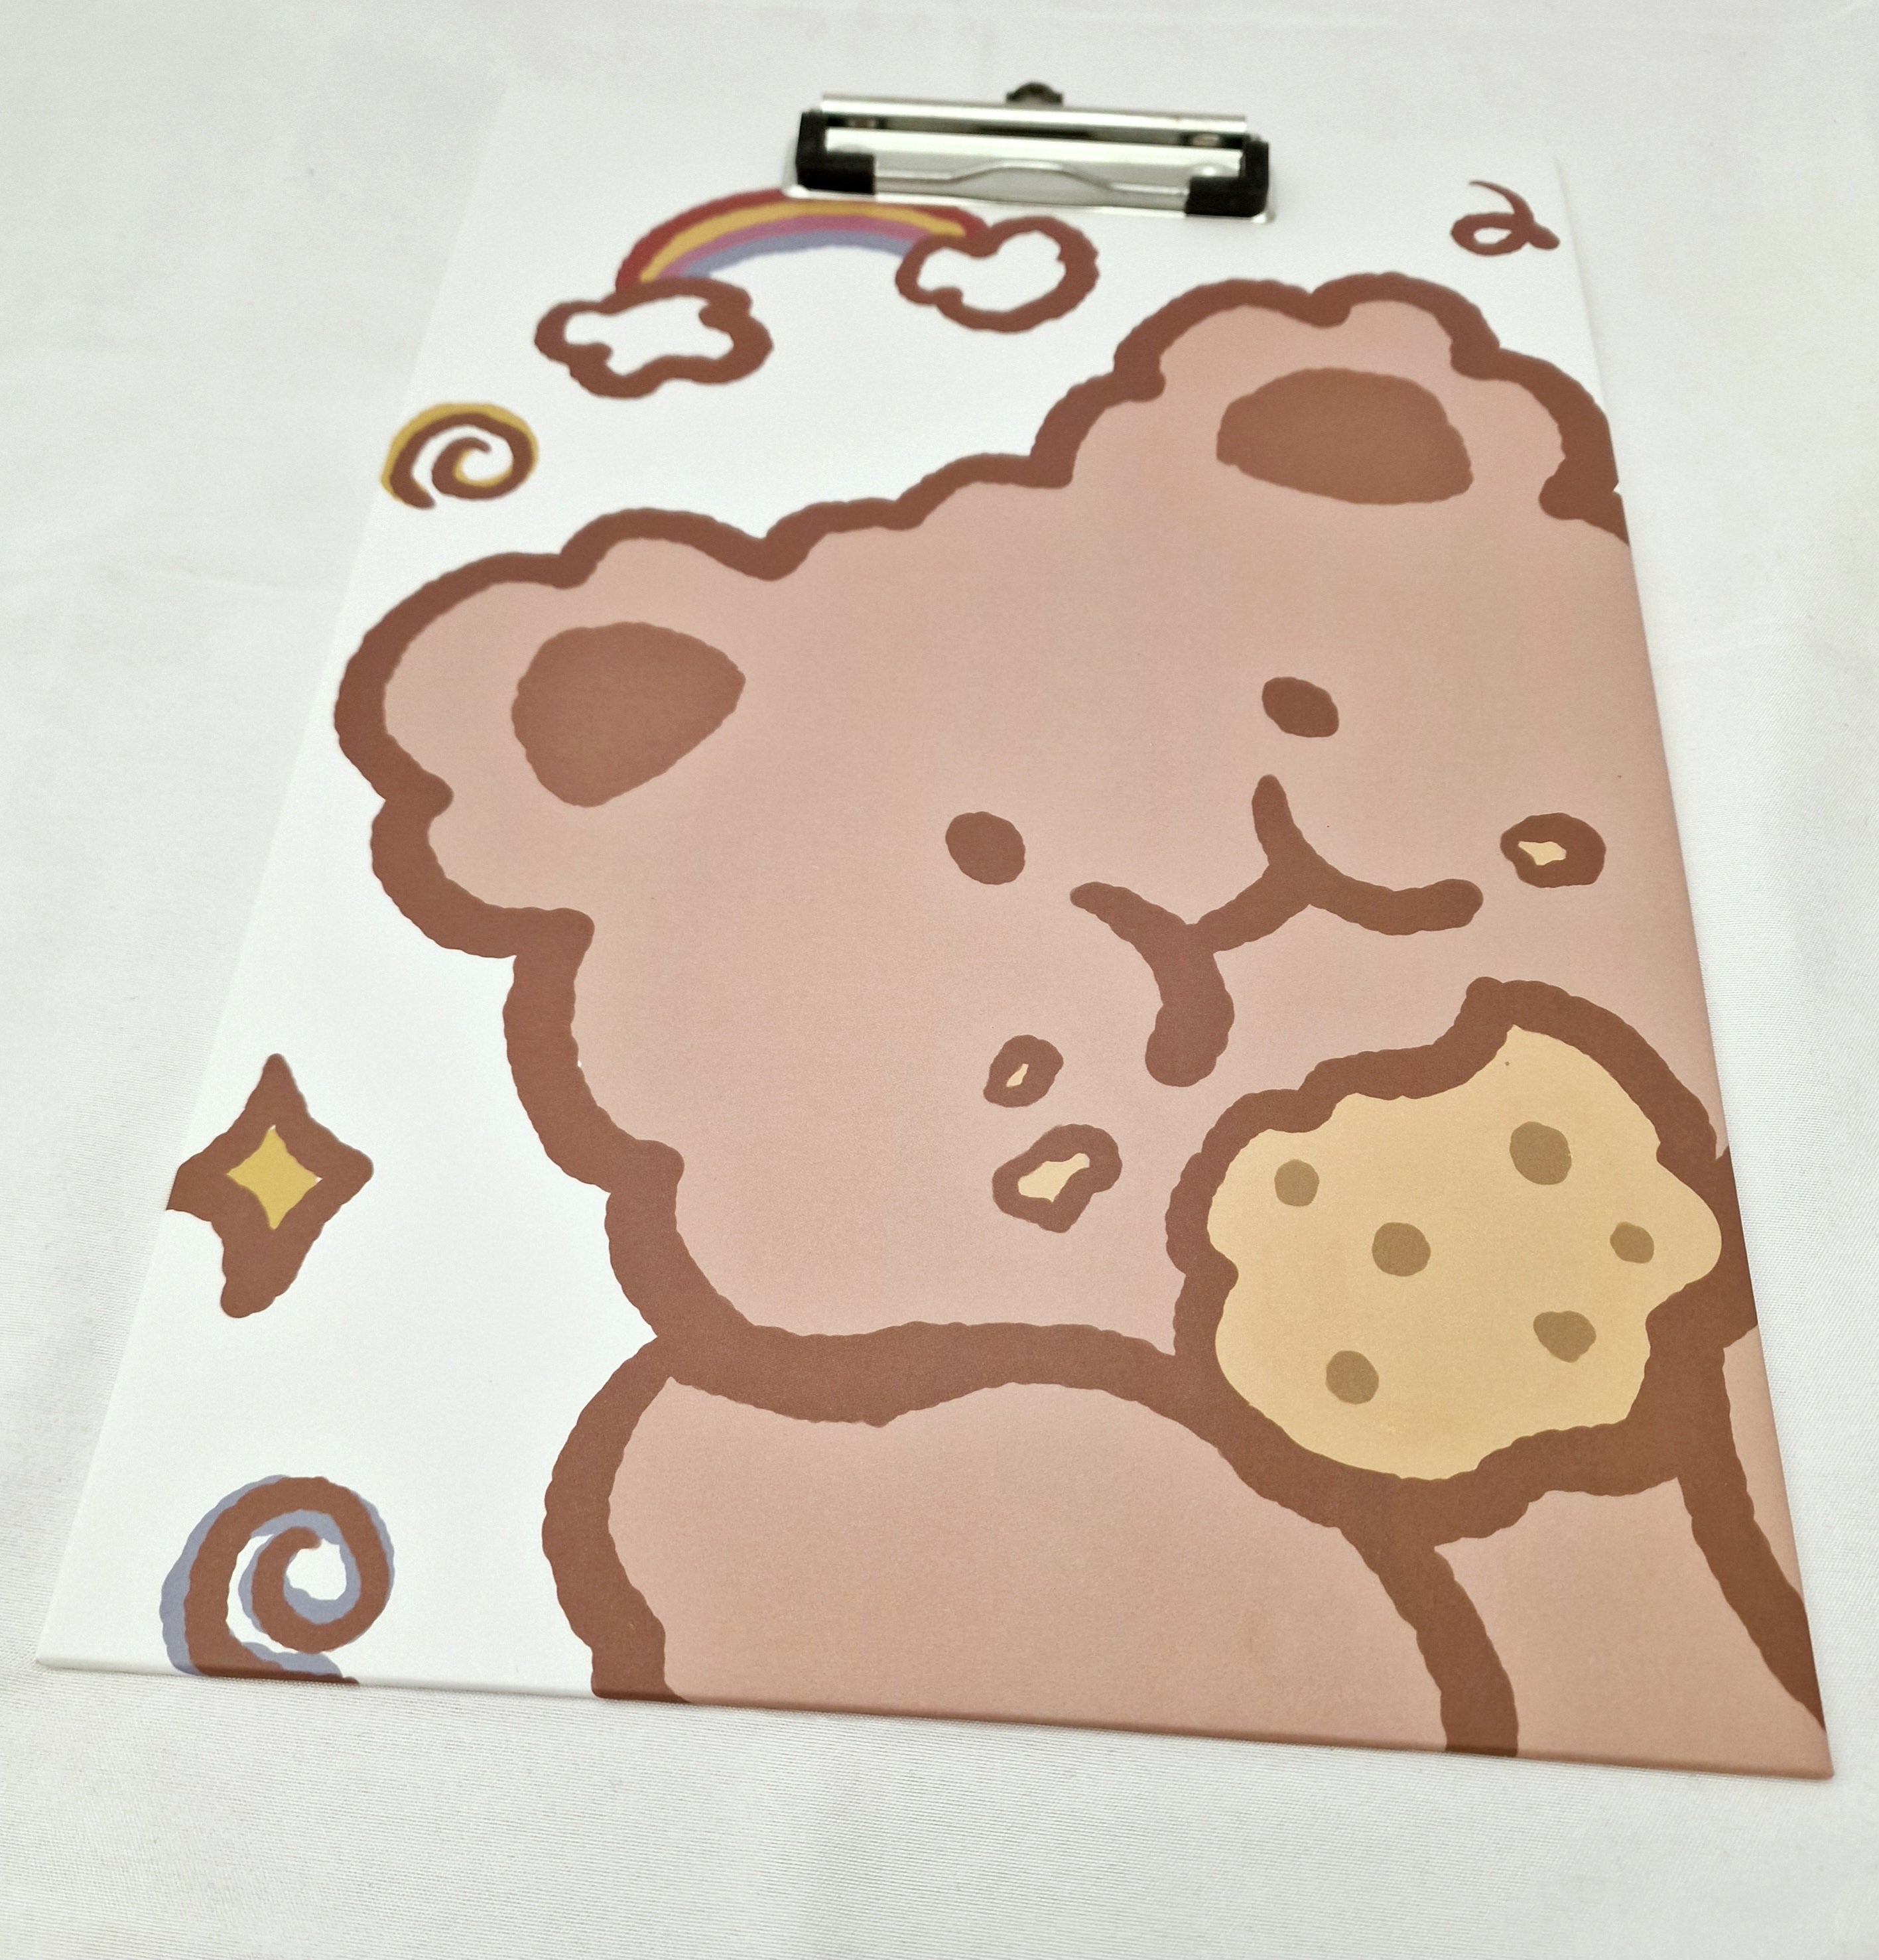 MajorCrafts White & Brown Bear Printed Kawaii themed A4 Clipboard